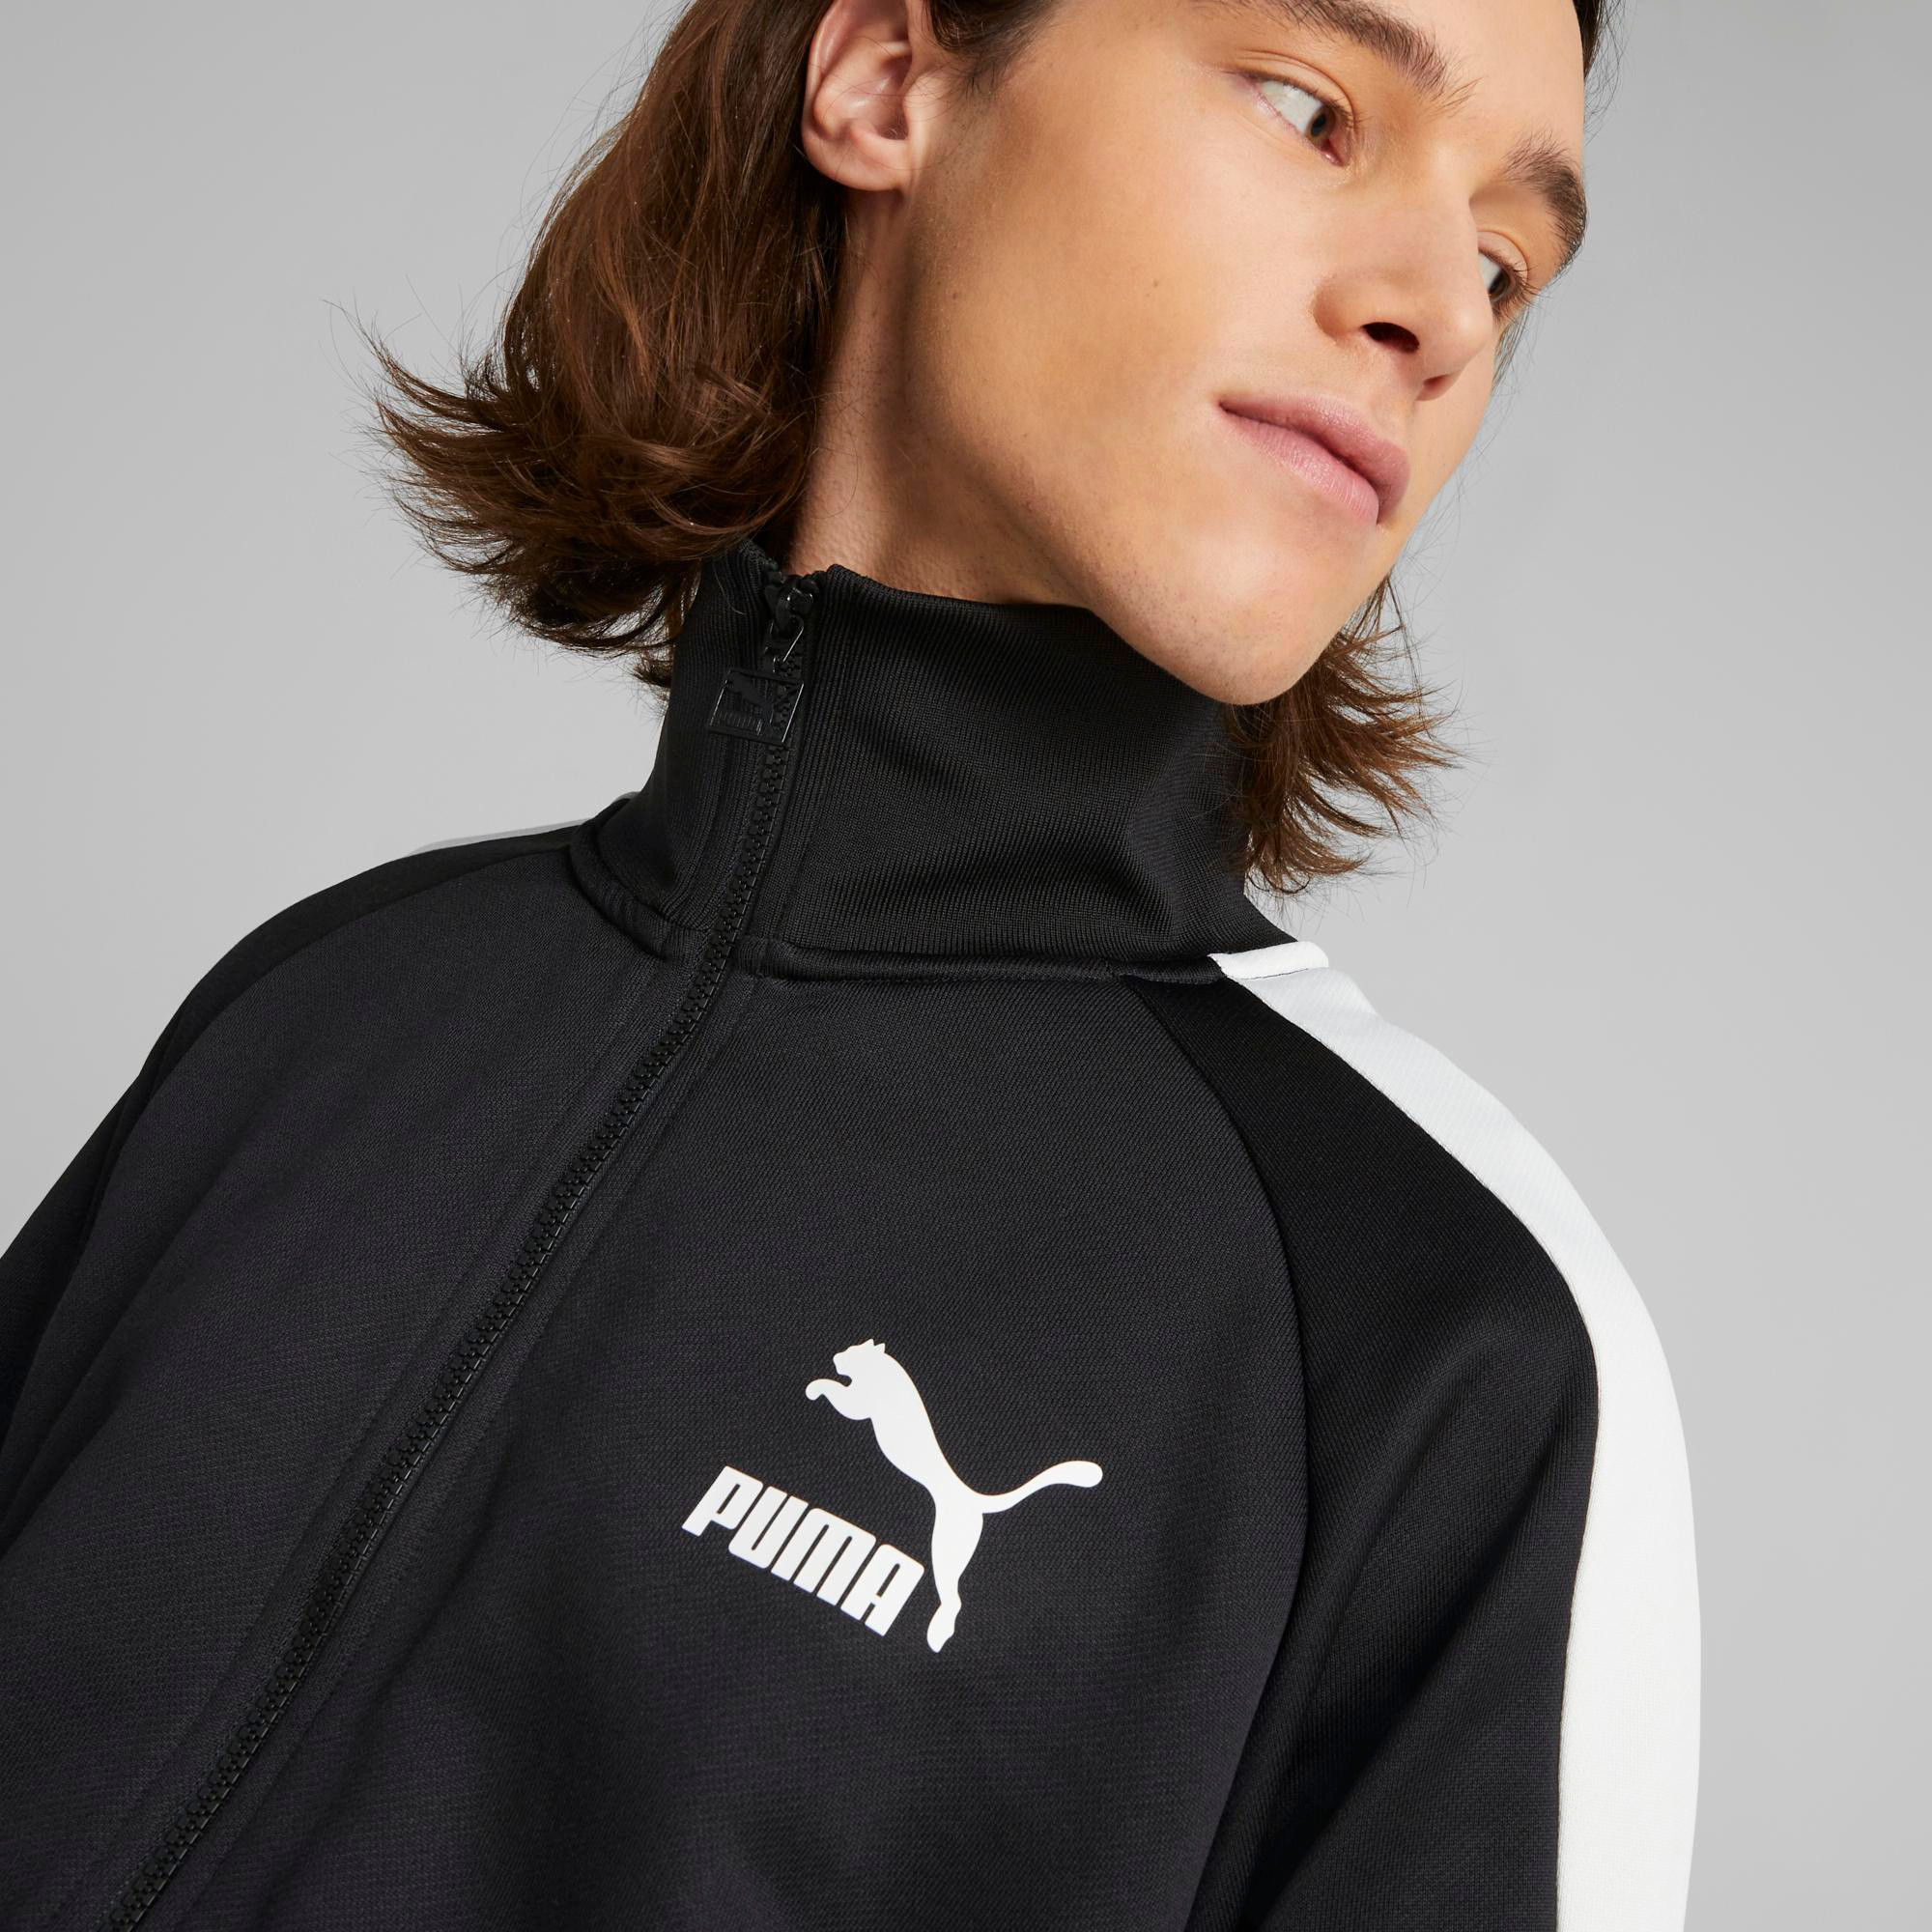 Puma - Sport jacket, Black, large image number 6